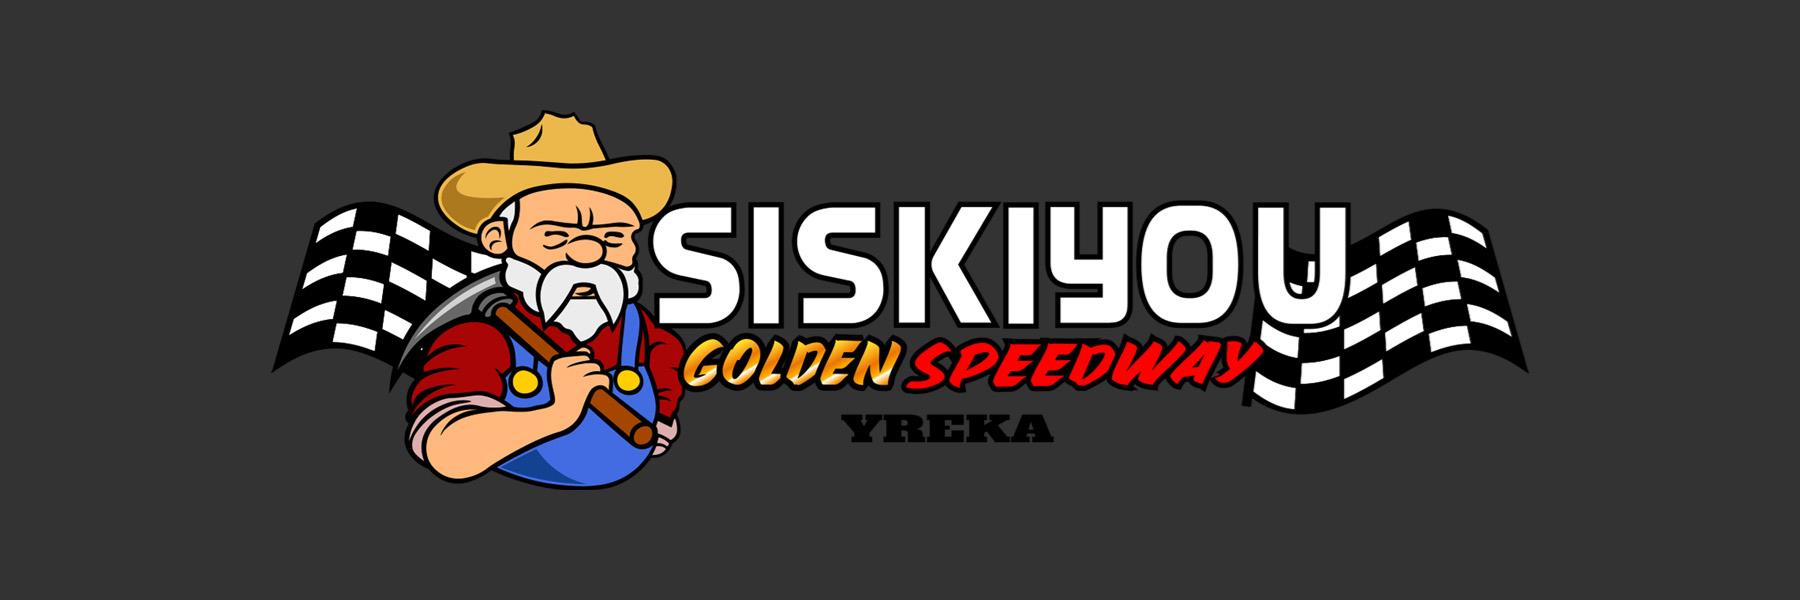 7/8/2022 - Siskiyou Golden Speedway